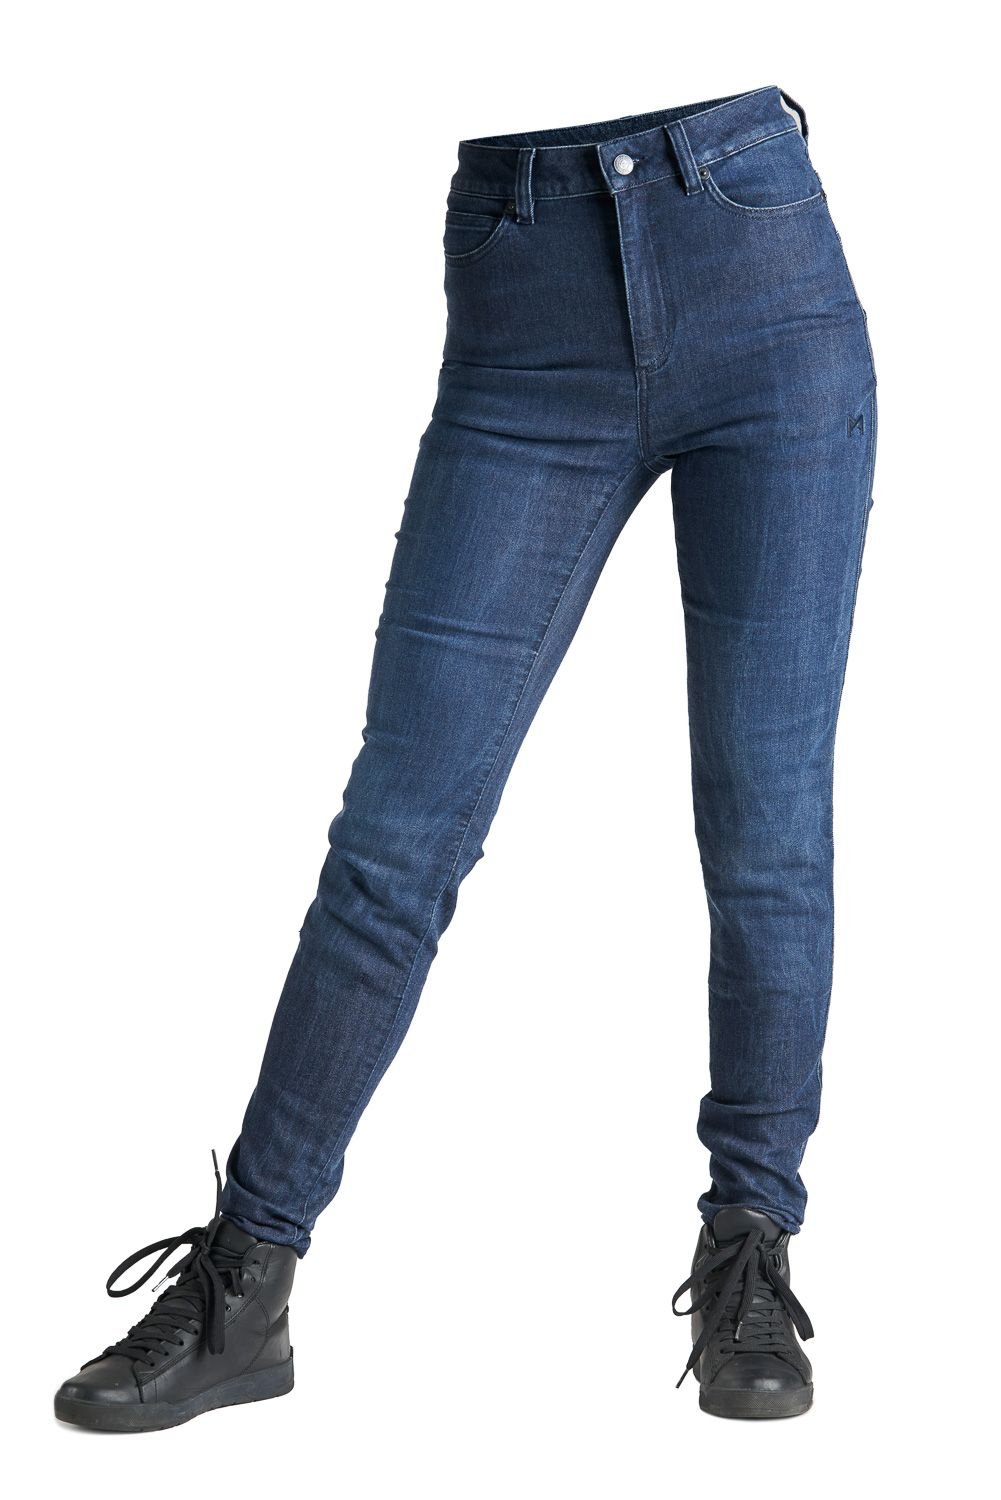 Image of Pando Moto Kusari Cor 02 Women Motorcycle Jeans Skinny-Fit Cordura Talla W26/L30